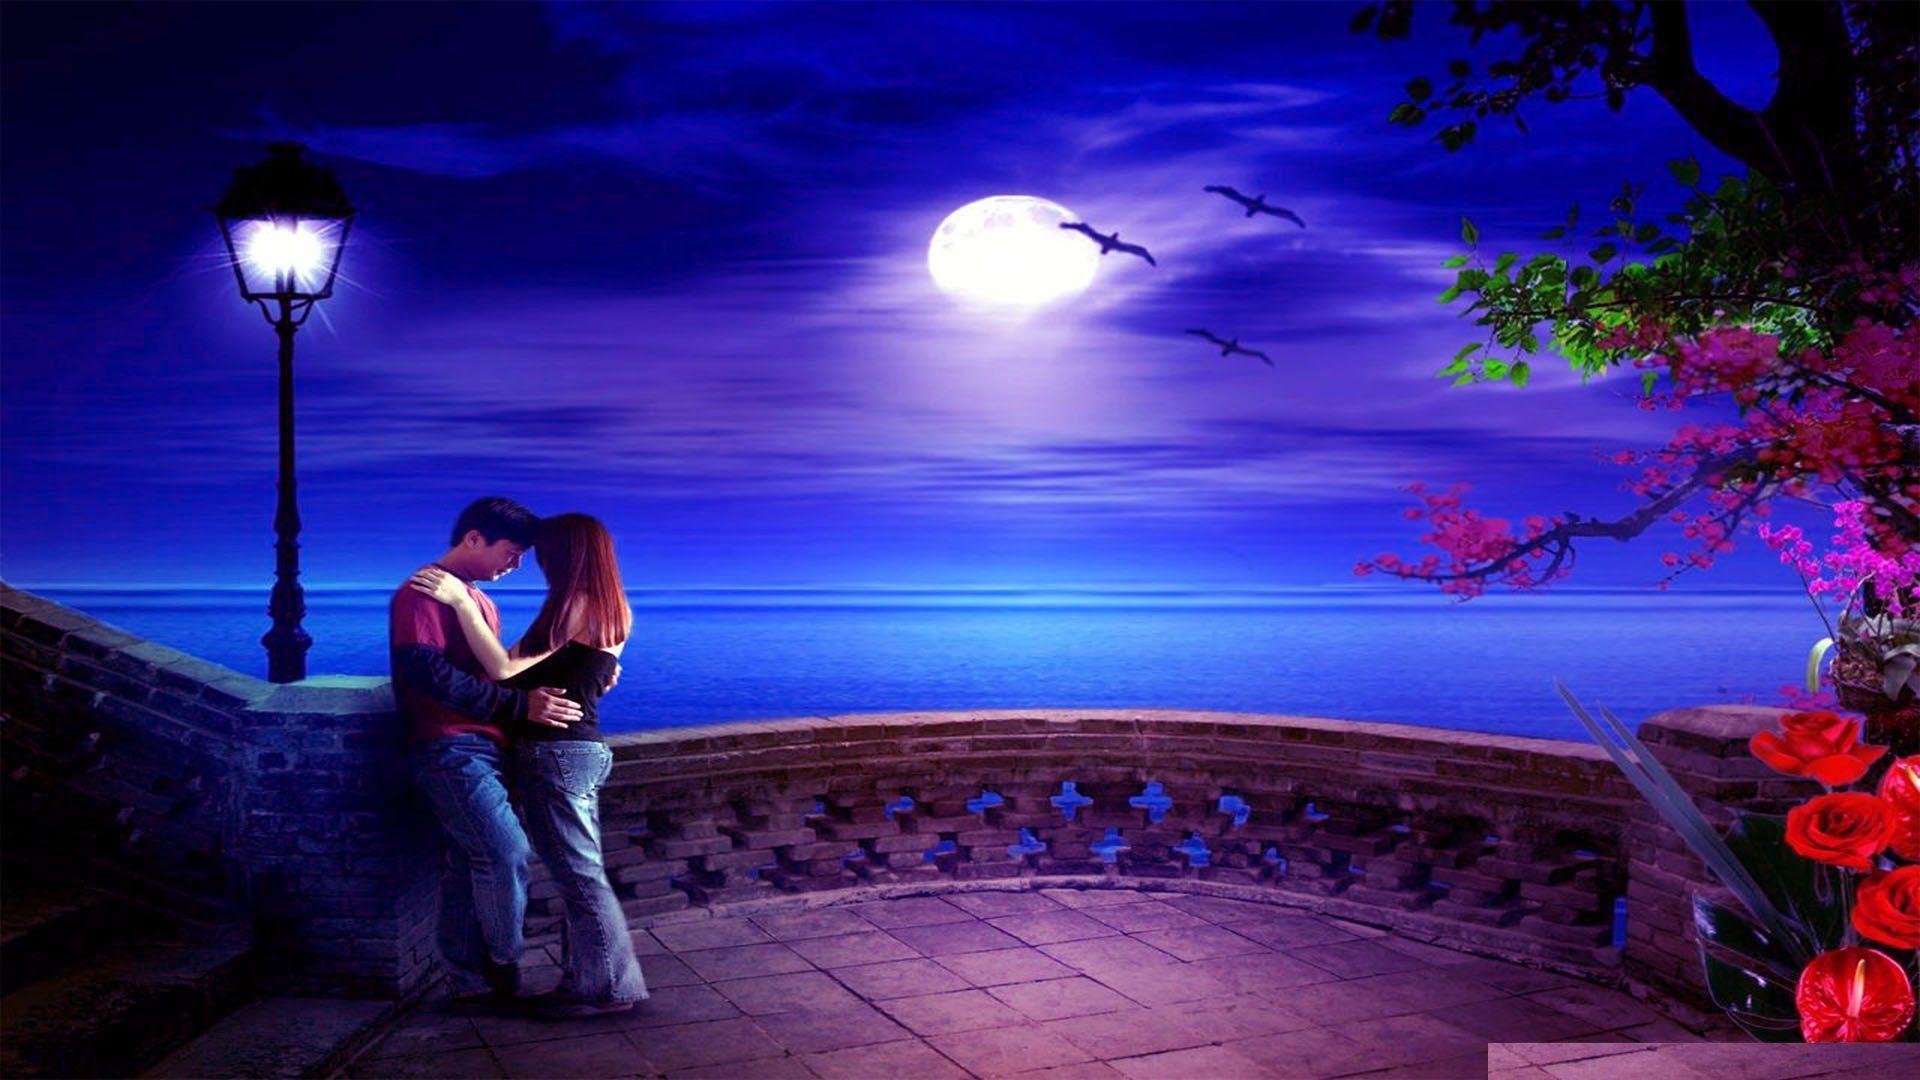 Romantic Love HD Wallpaper. Romantic background, Love wallpaper romantic, Romantic image